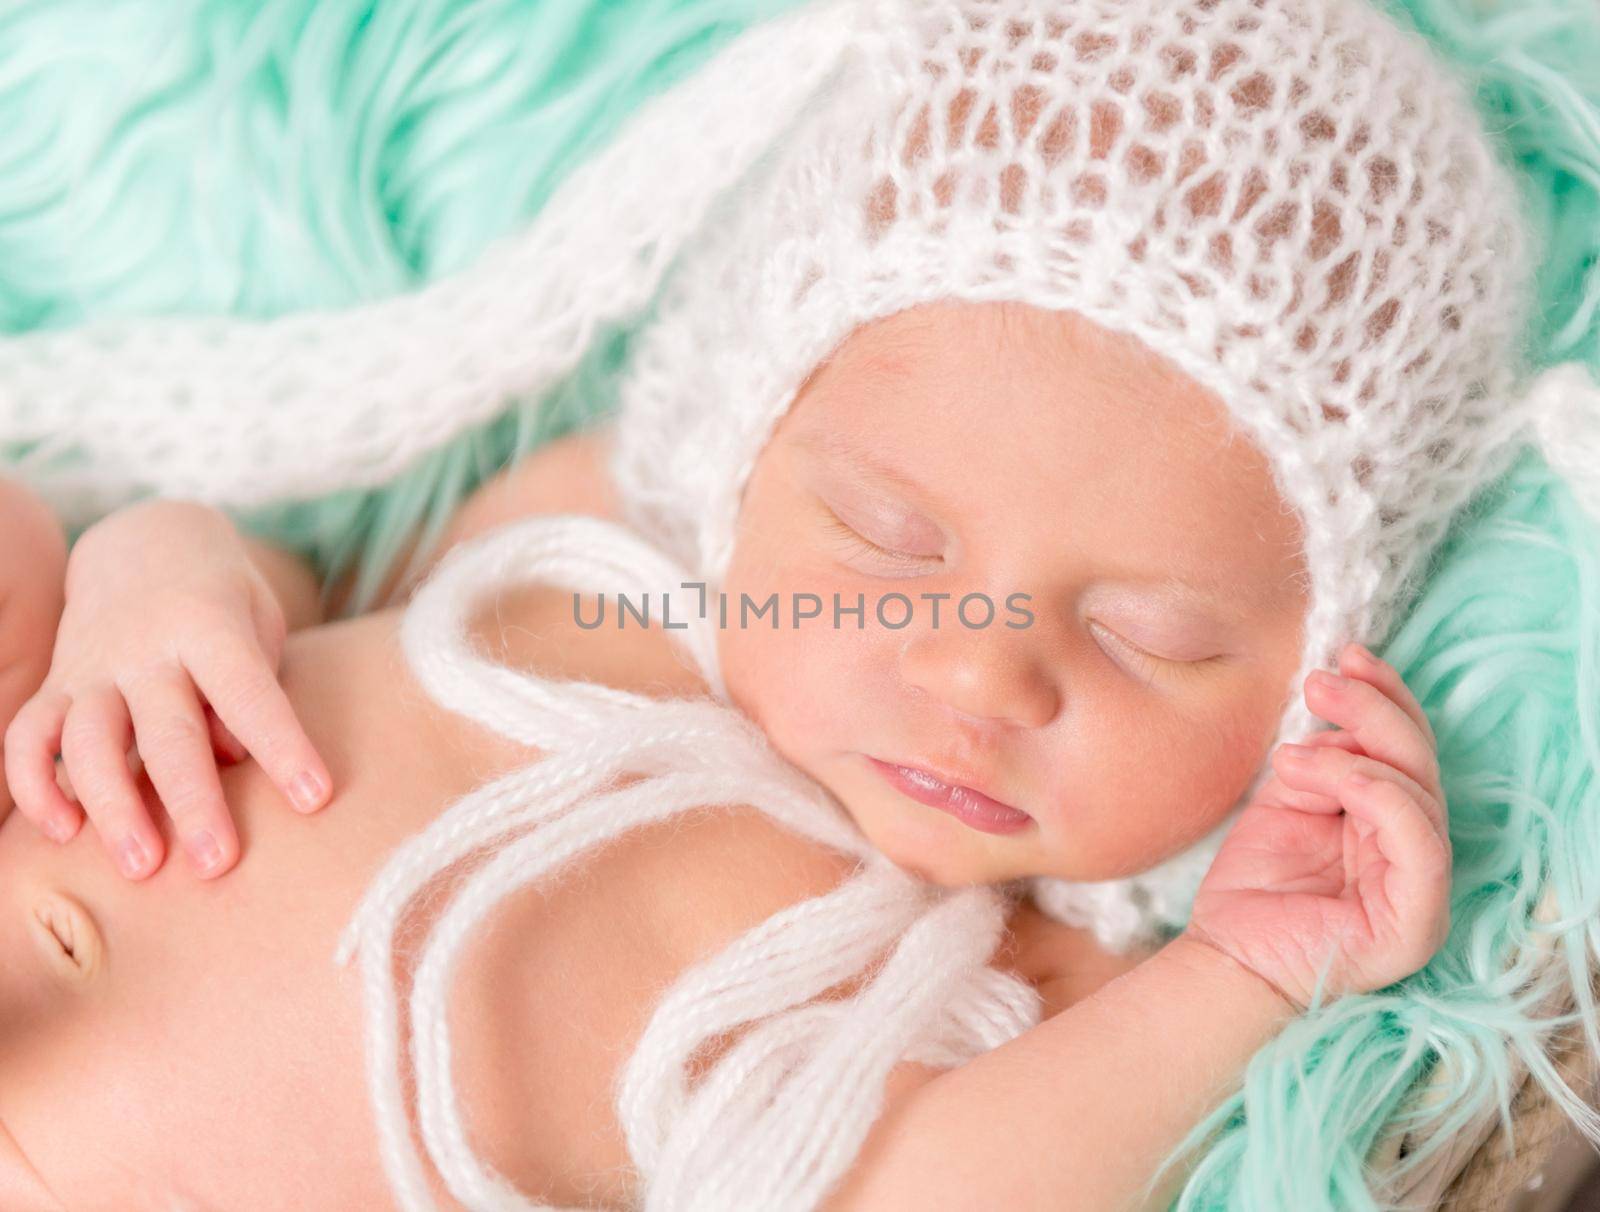 lovely newborn baby in hat sleeping on turquoise blanket by tan4ikk1